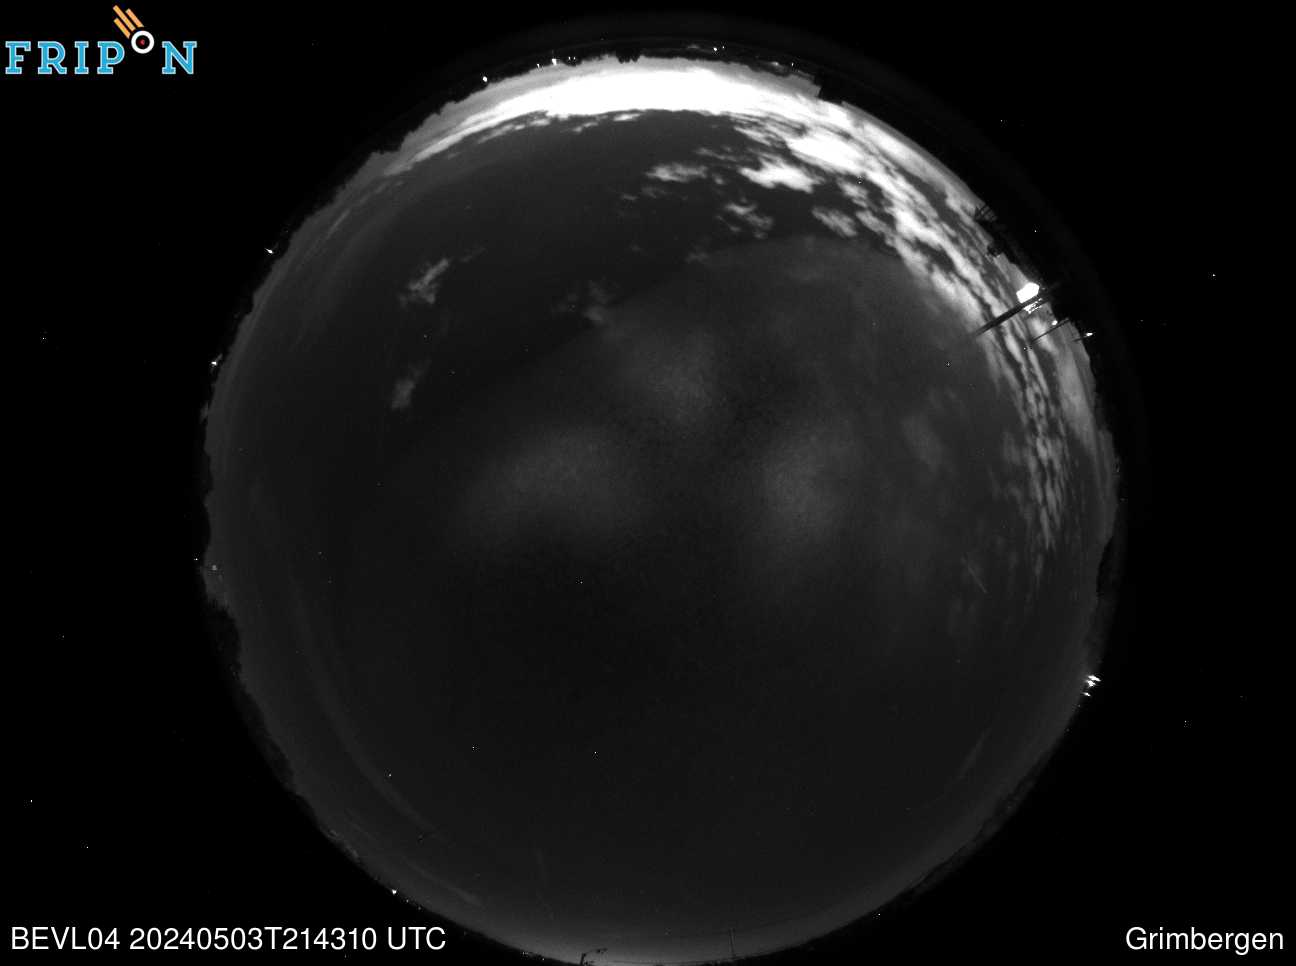 Full size image detection Grimbergen (BEVL04) Universal Time